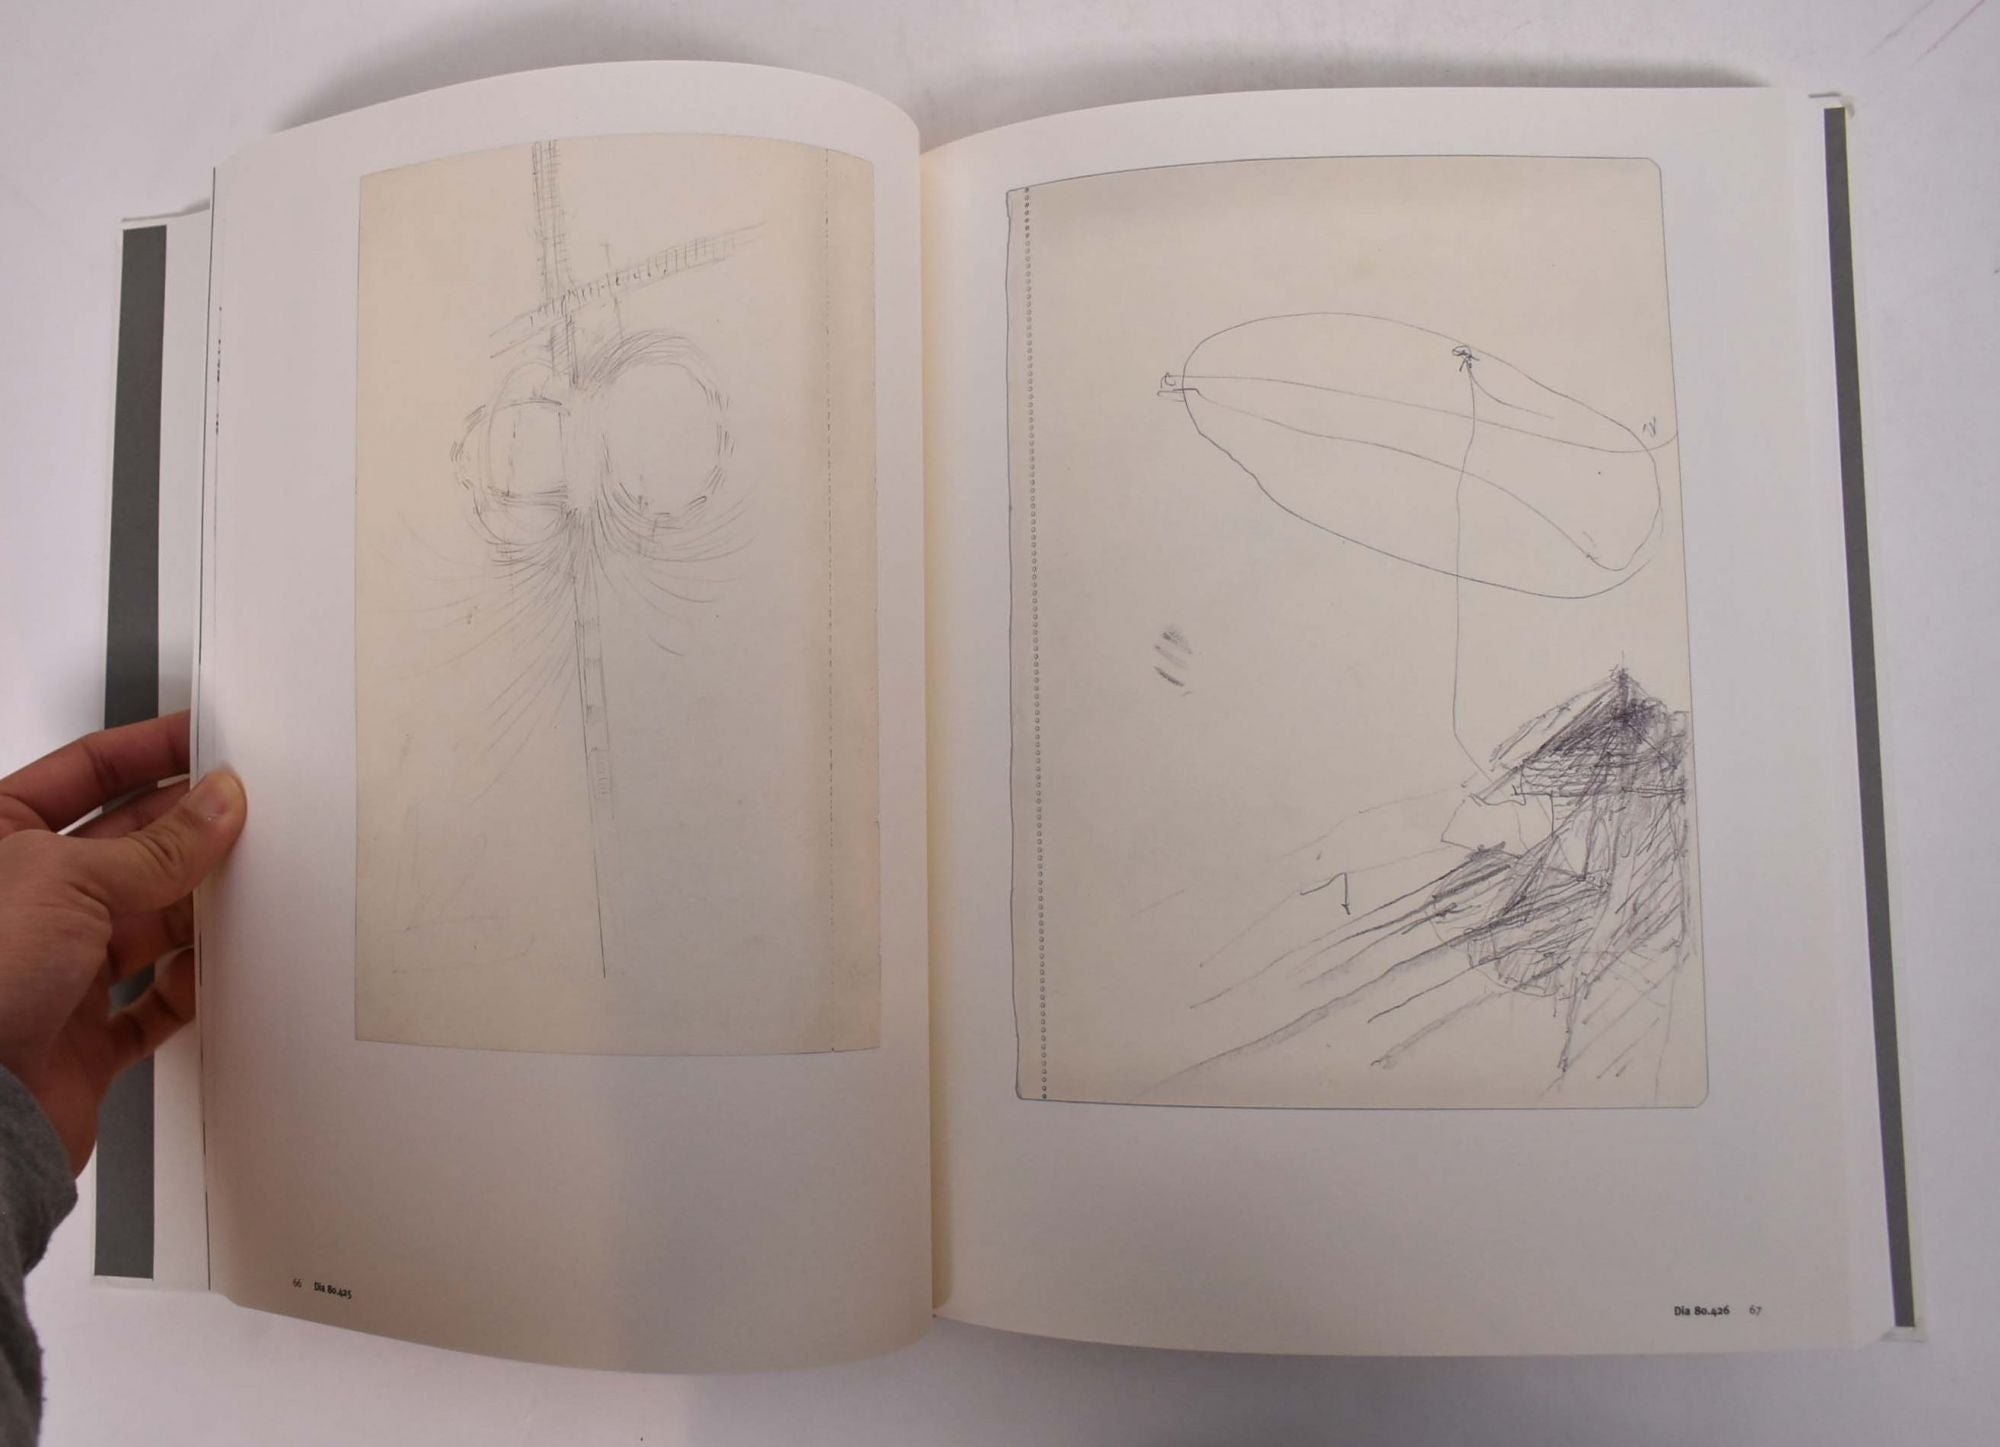 Joseph Beuys: Drawings After the Codices Madrid of Leonardo da Vinci by  Lynne Cooke, Karen Kelly on Mullen Books